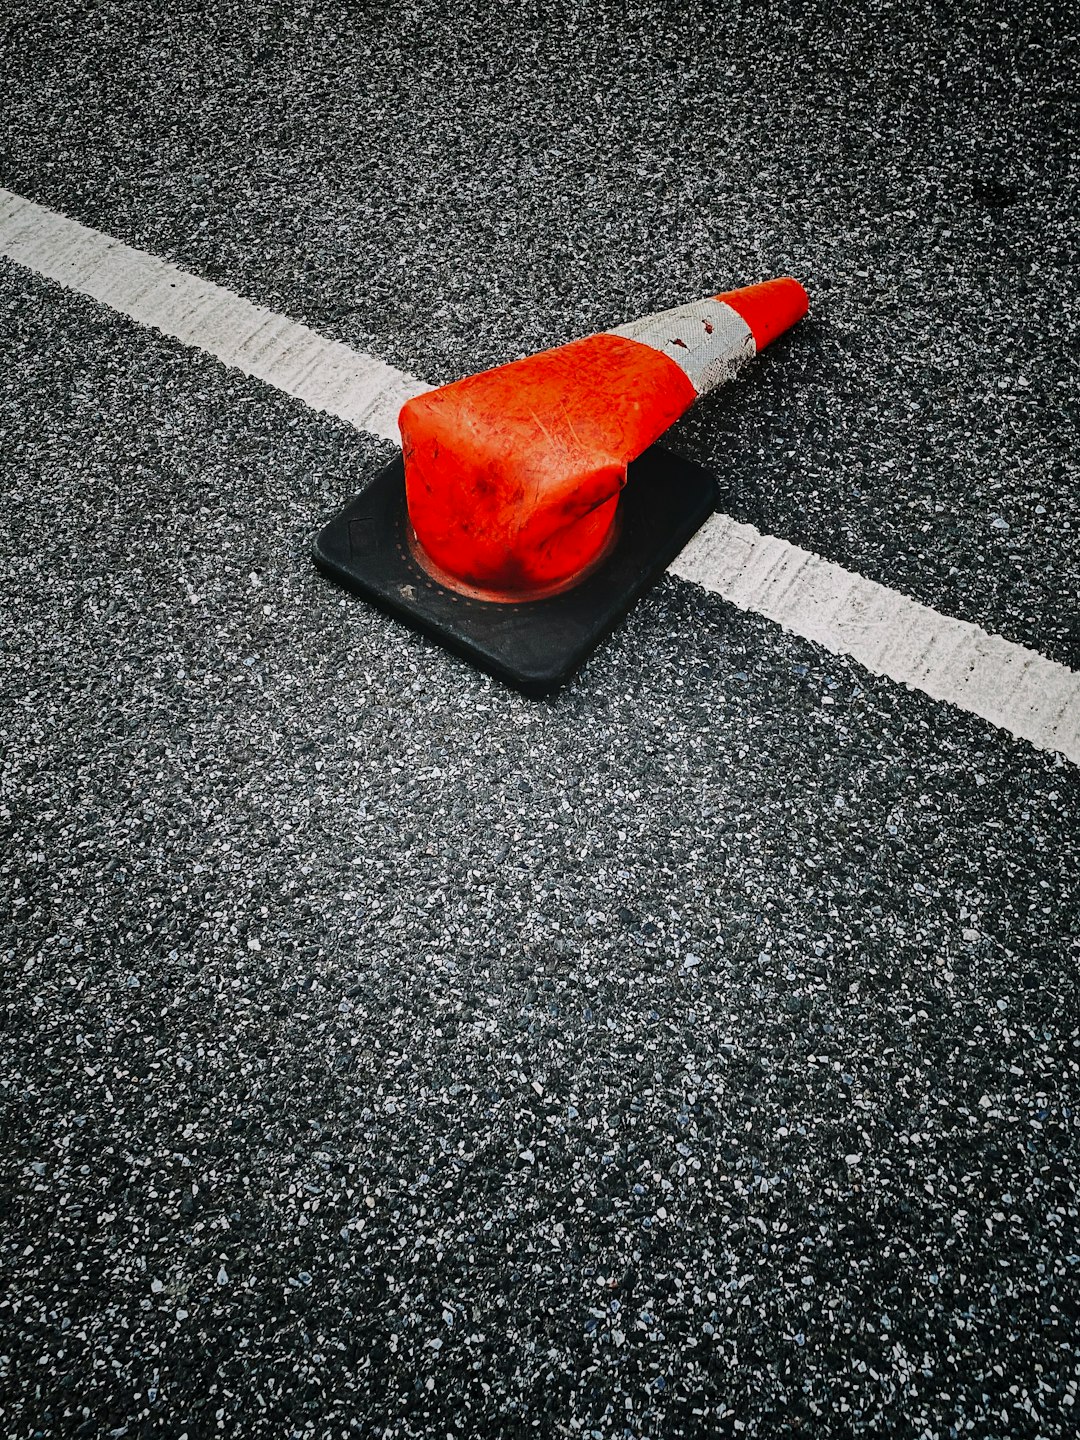 orange and white traffic cone on black and white asphalt road